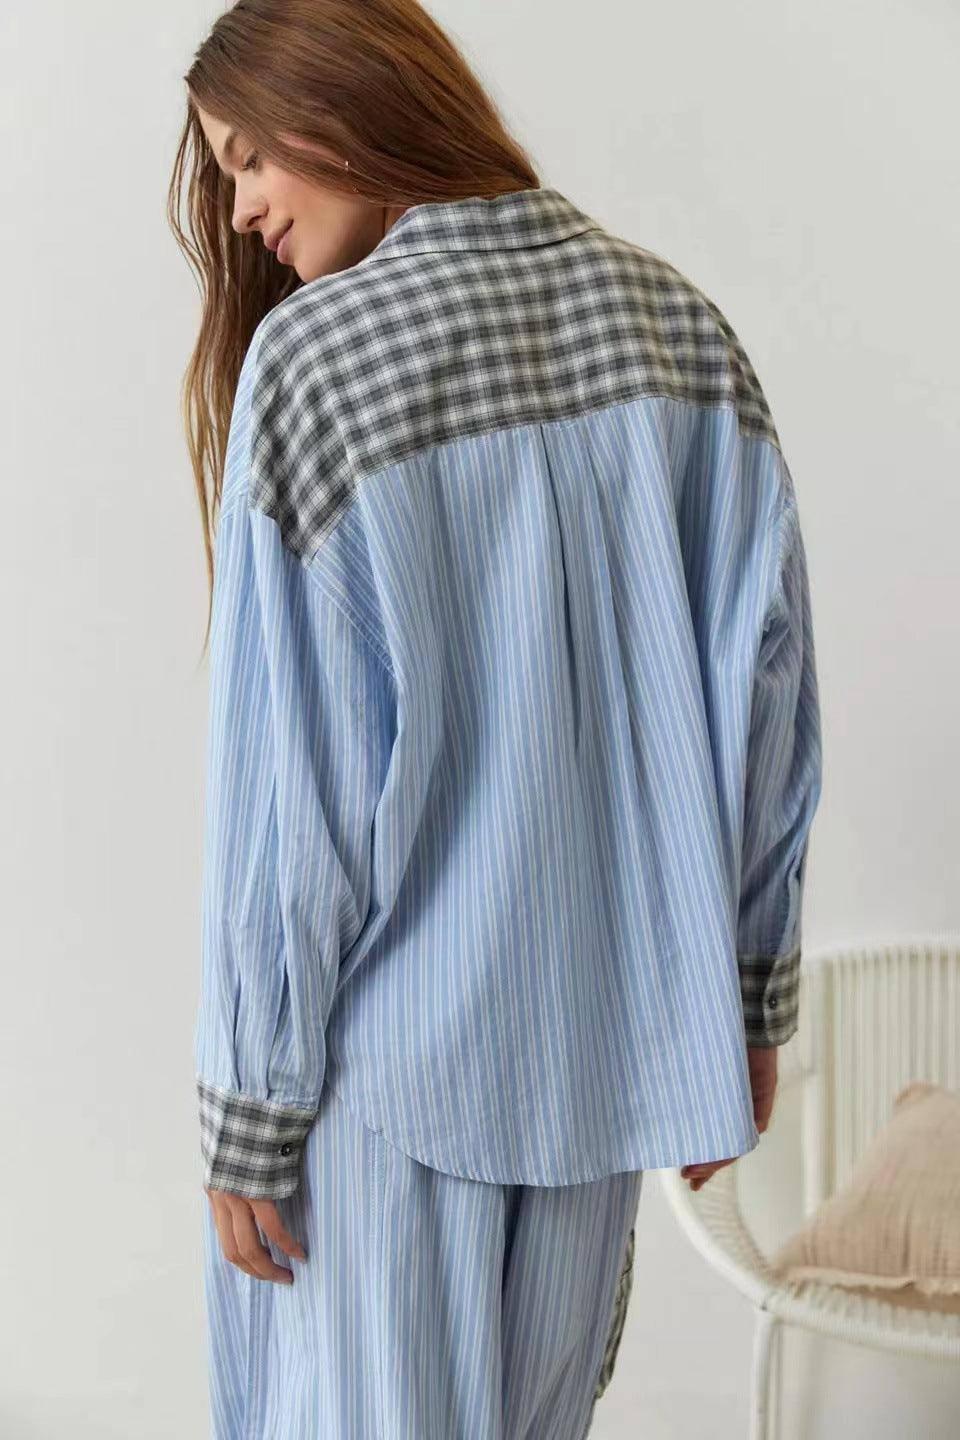 Autumn Women's Clothing Casual Homewear Plaid Shirt Outfit-6